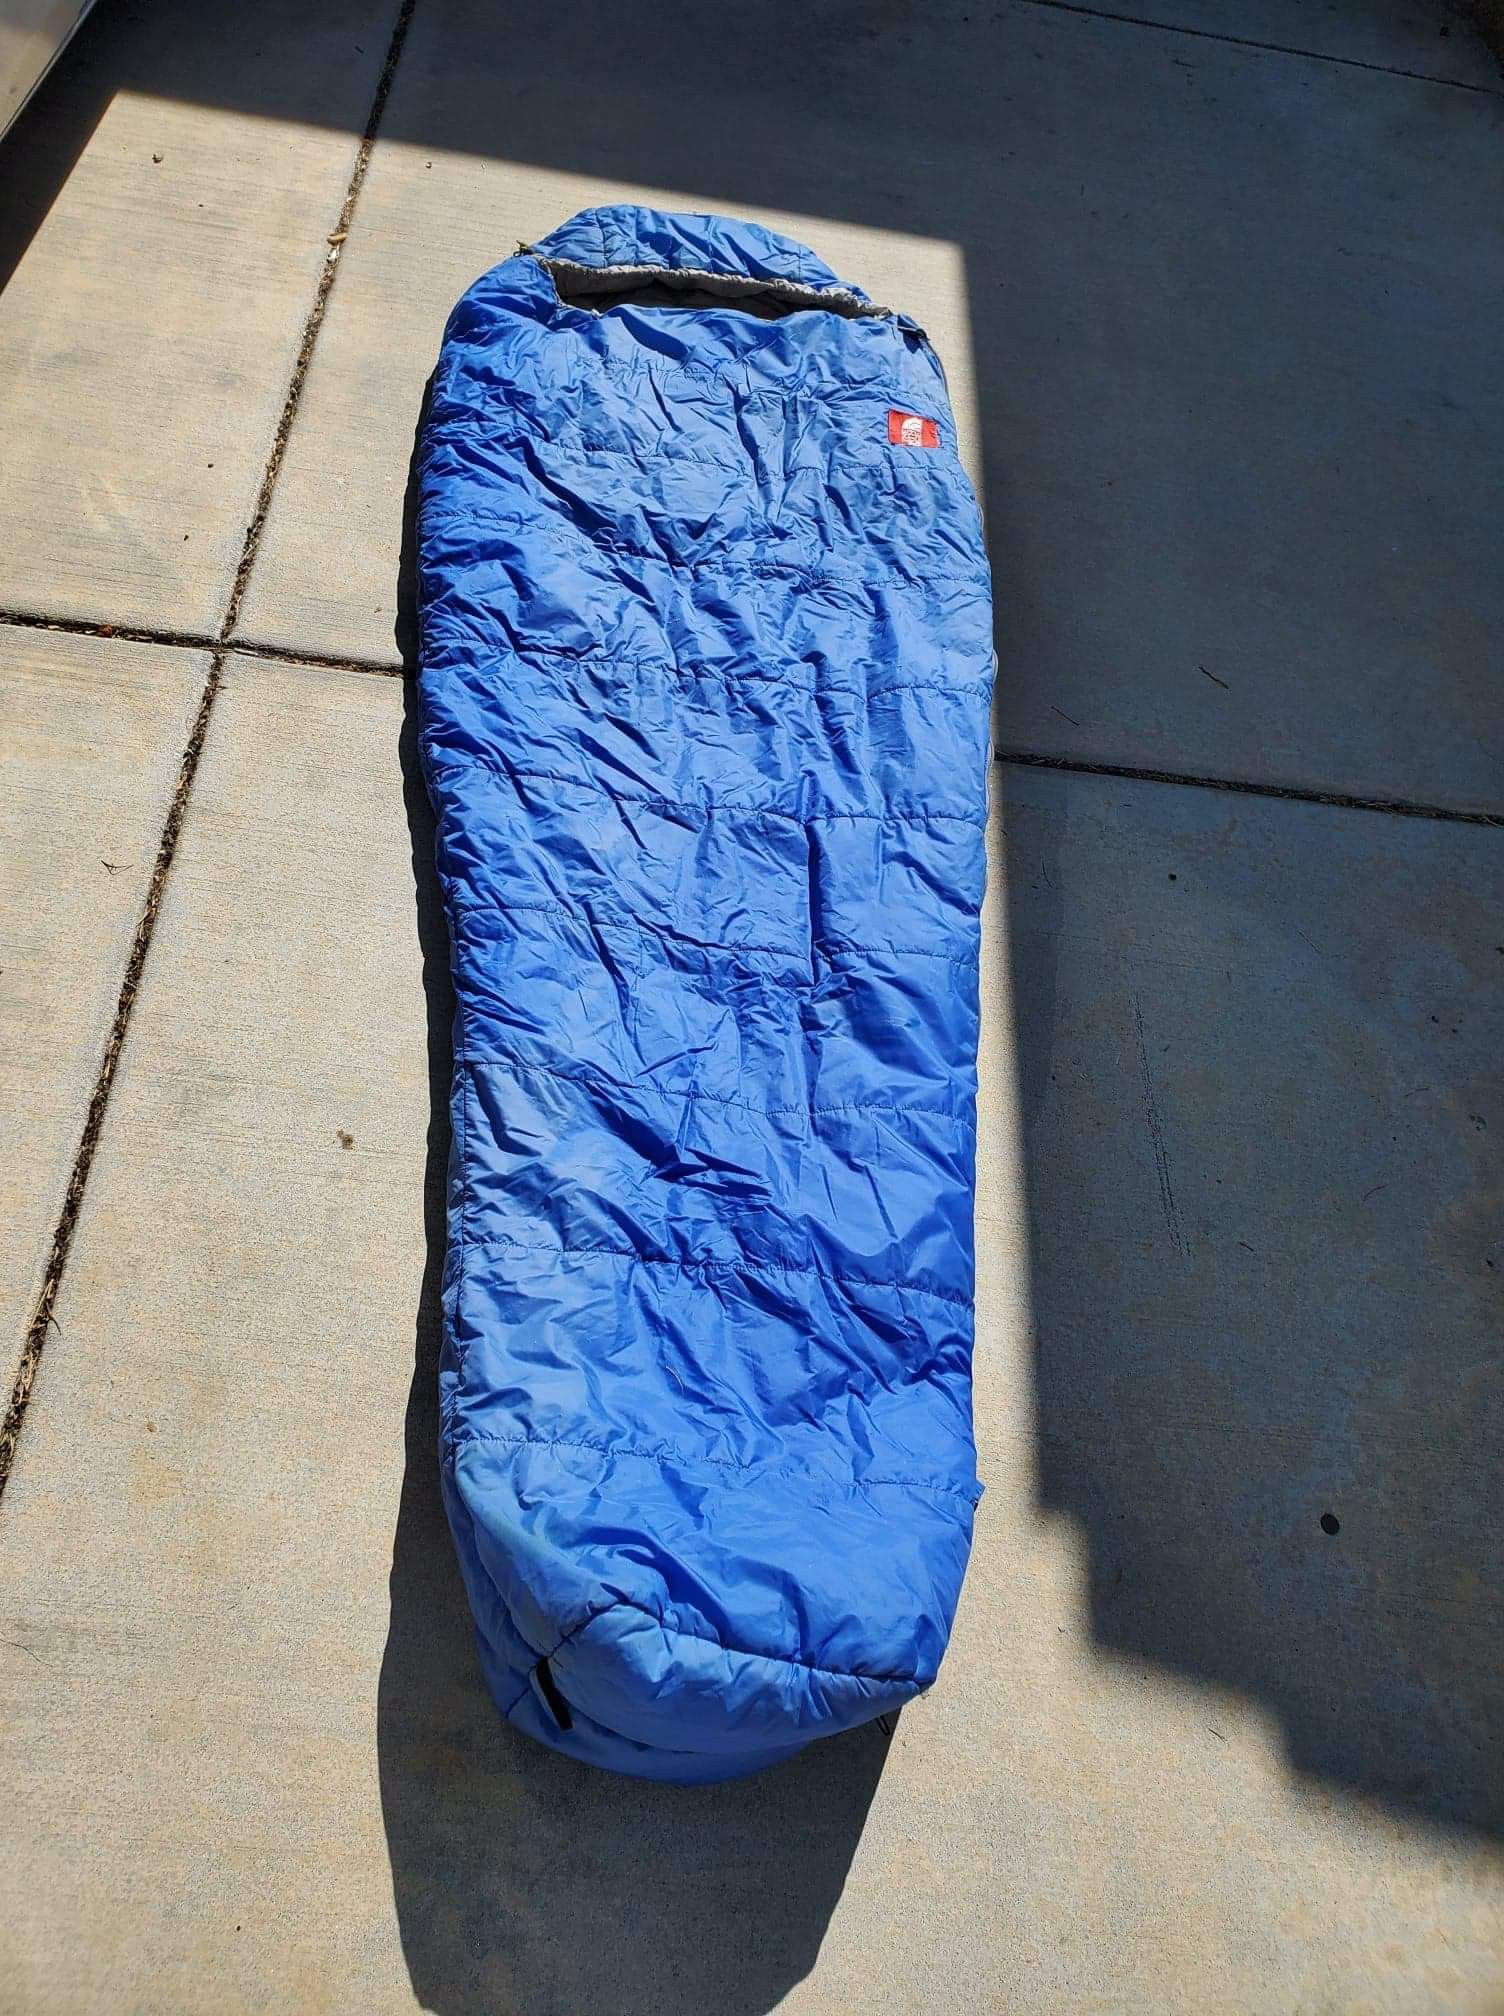 North Face 20f degree mummy hiking sleeping bag.